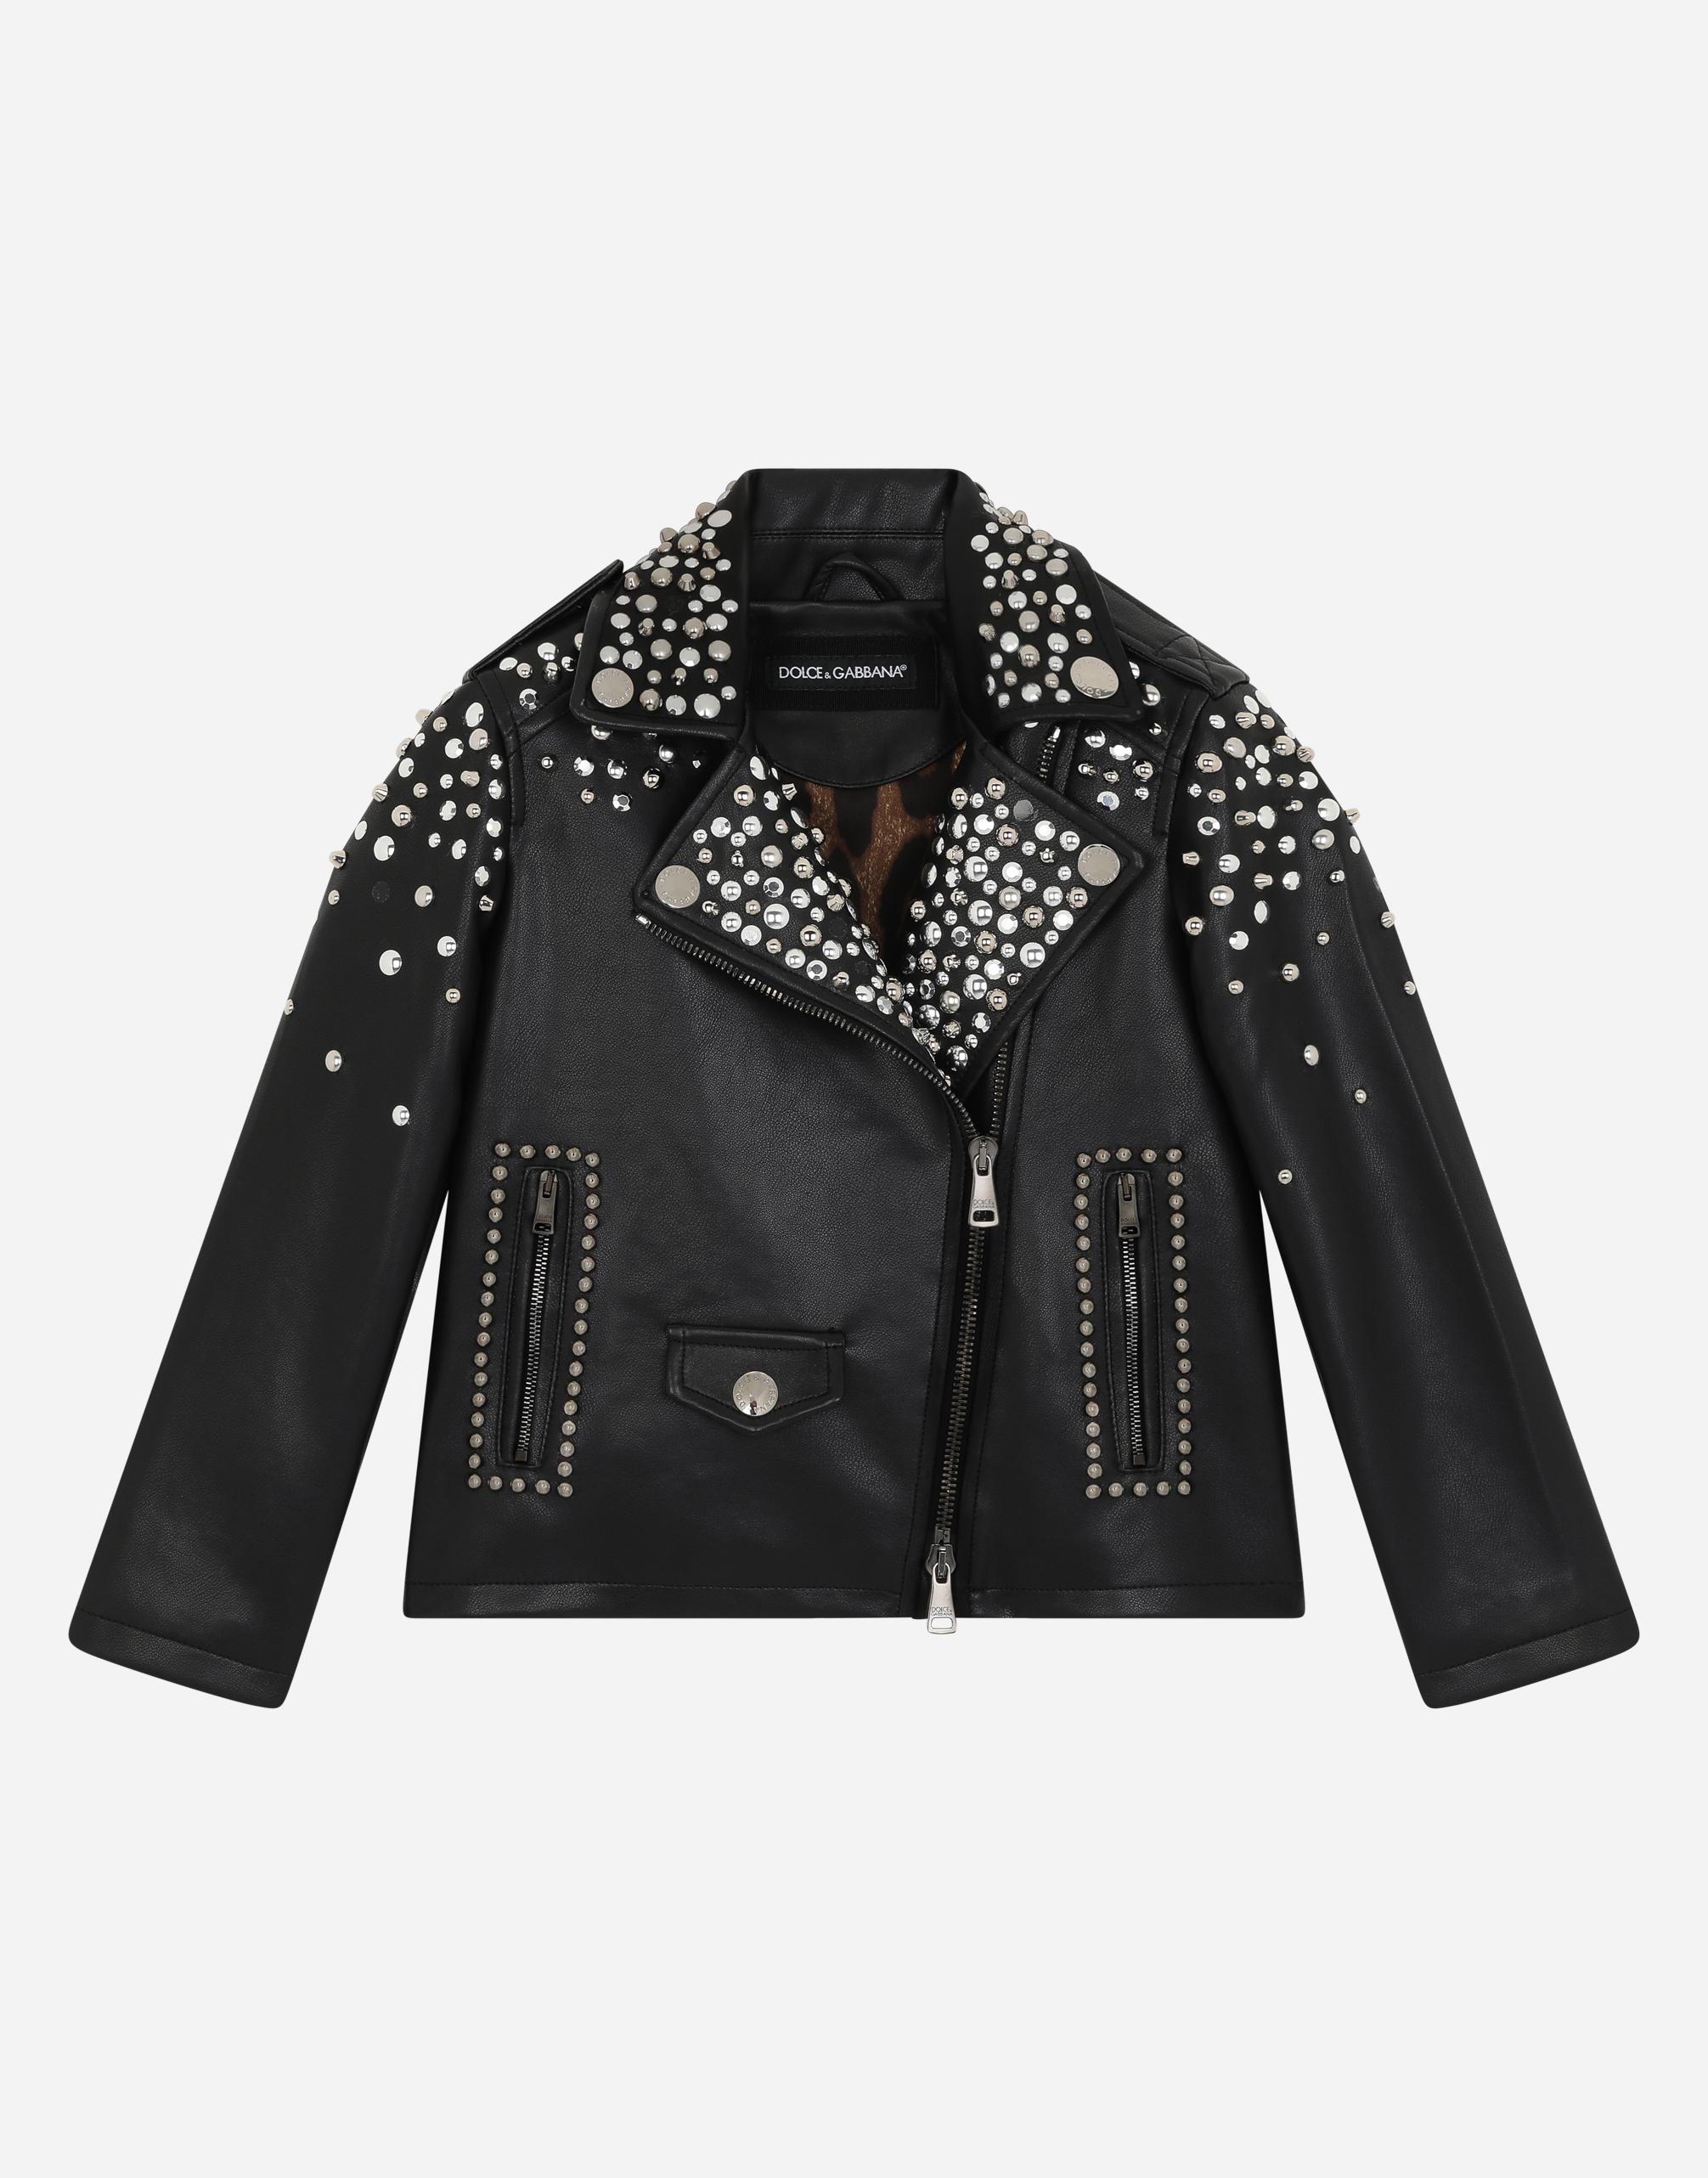 Dolce & Gabbana Studded Leather Biker Jacket in Black | Lyst